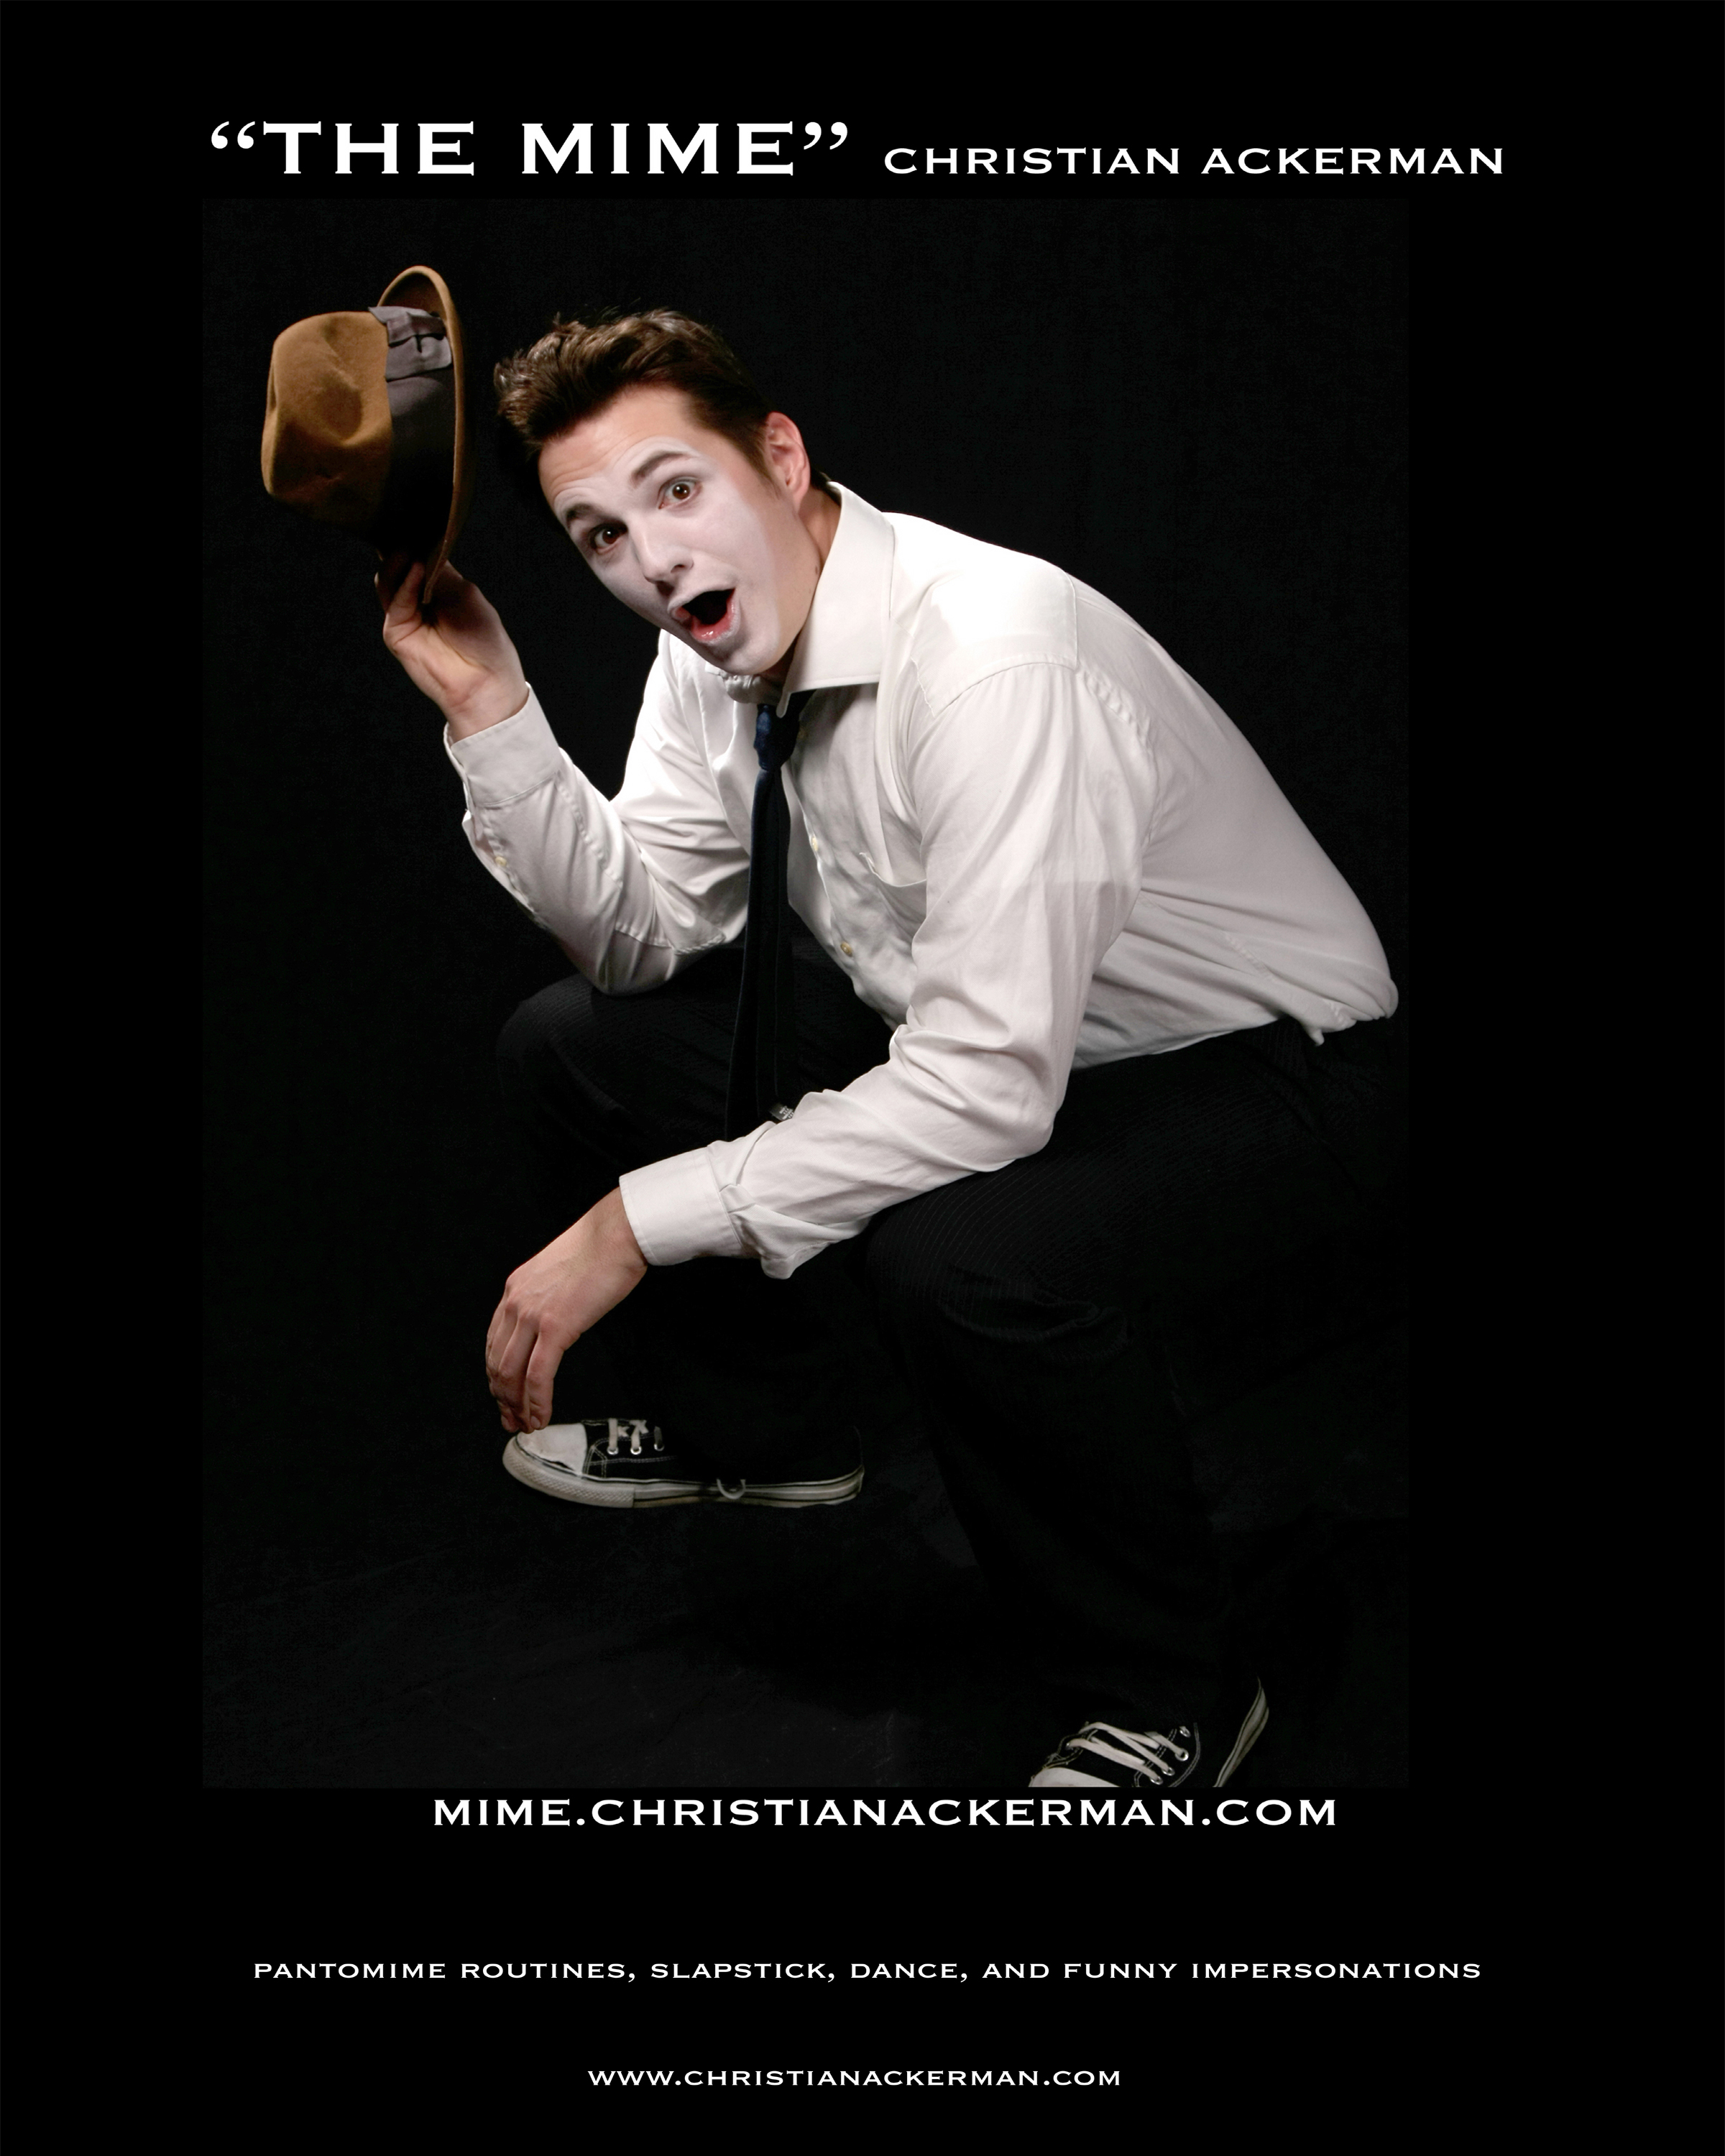 The Mime Christian Ackerman mime.christianackerman.com